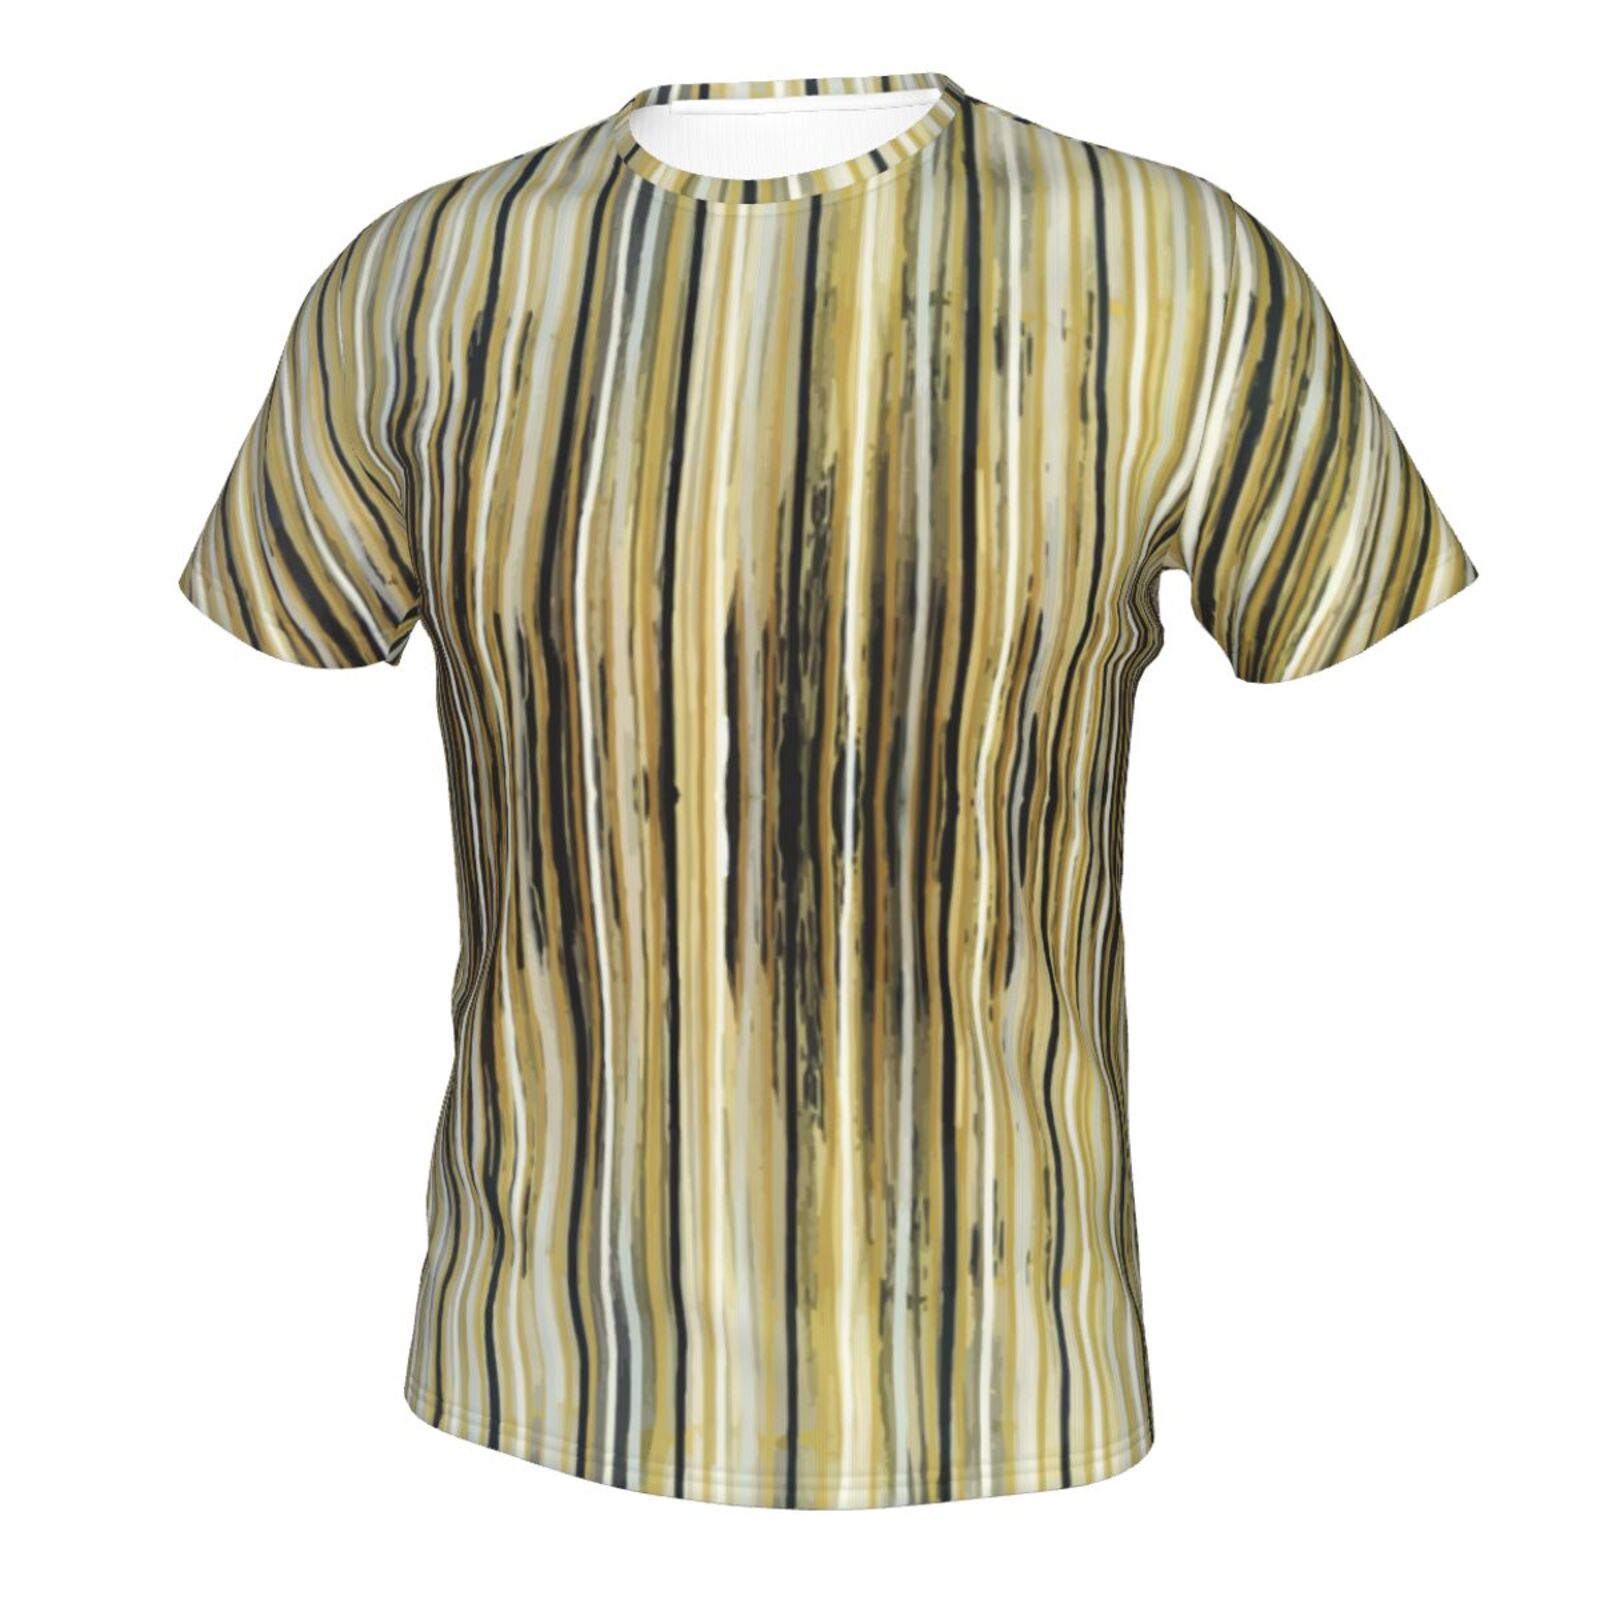 Camiseta Brasil Clássica A Crush On Stripes Elementos De Pintura